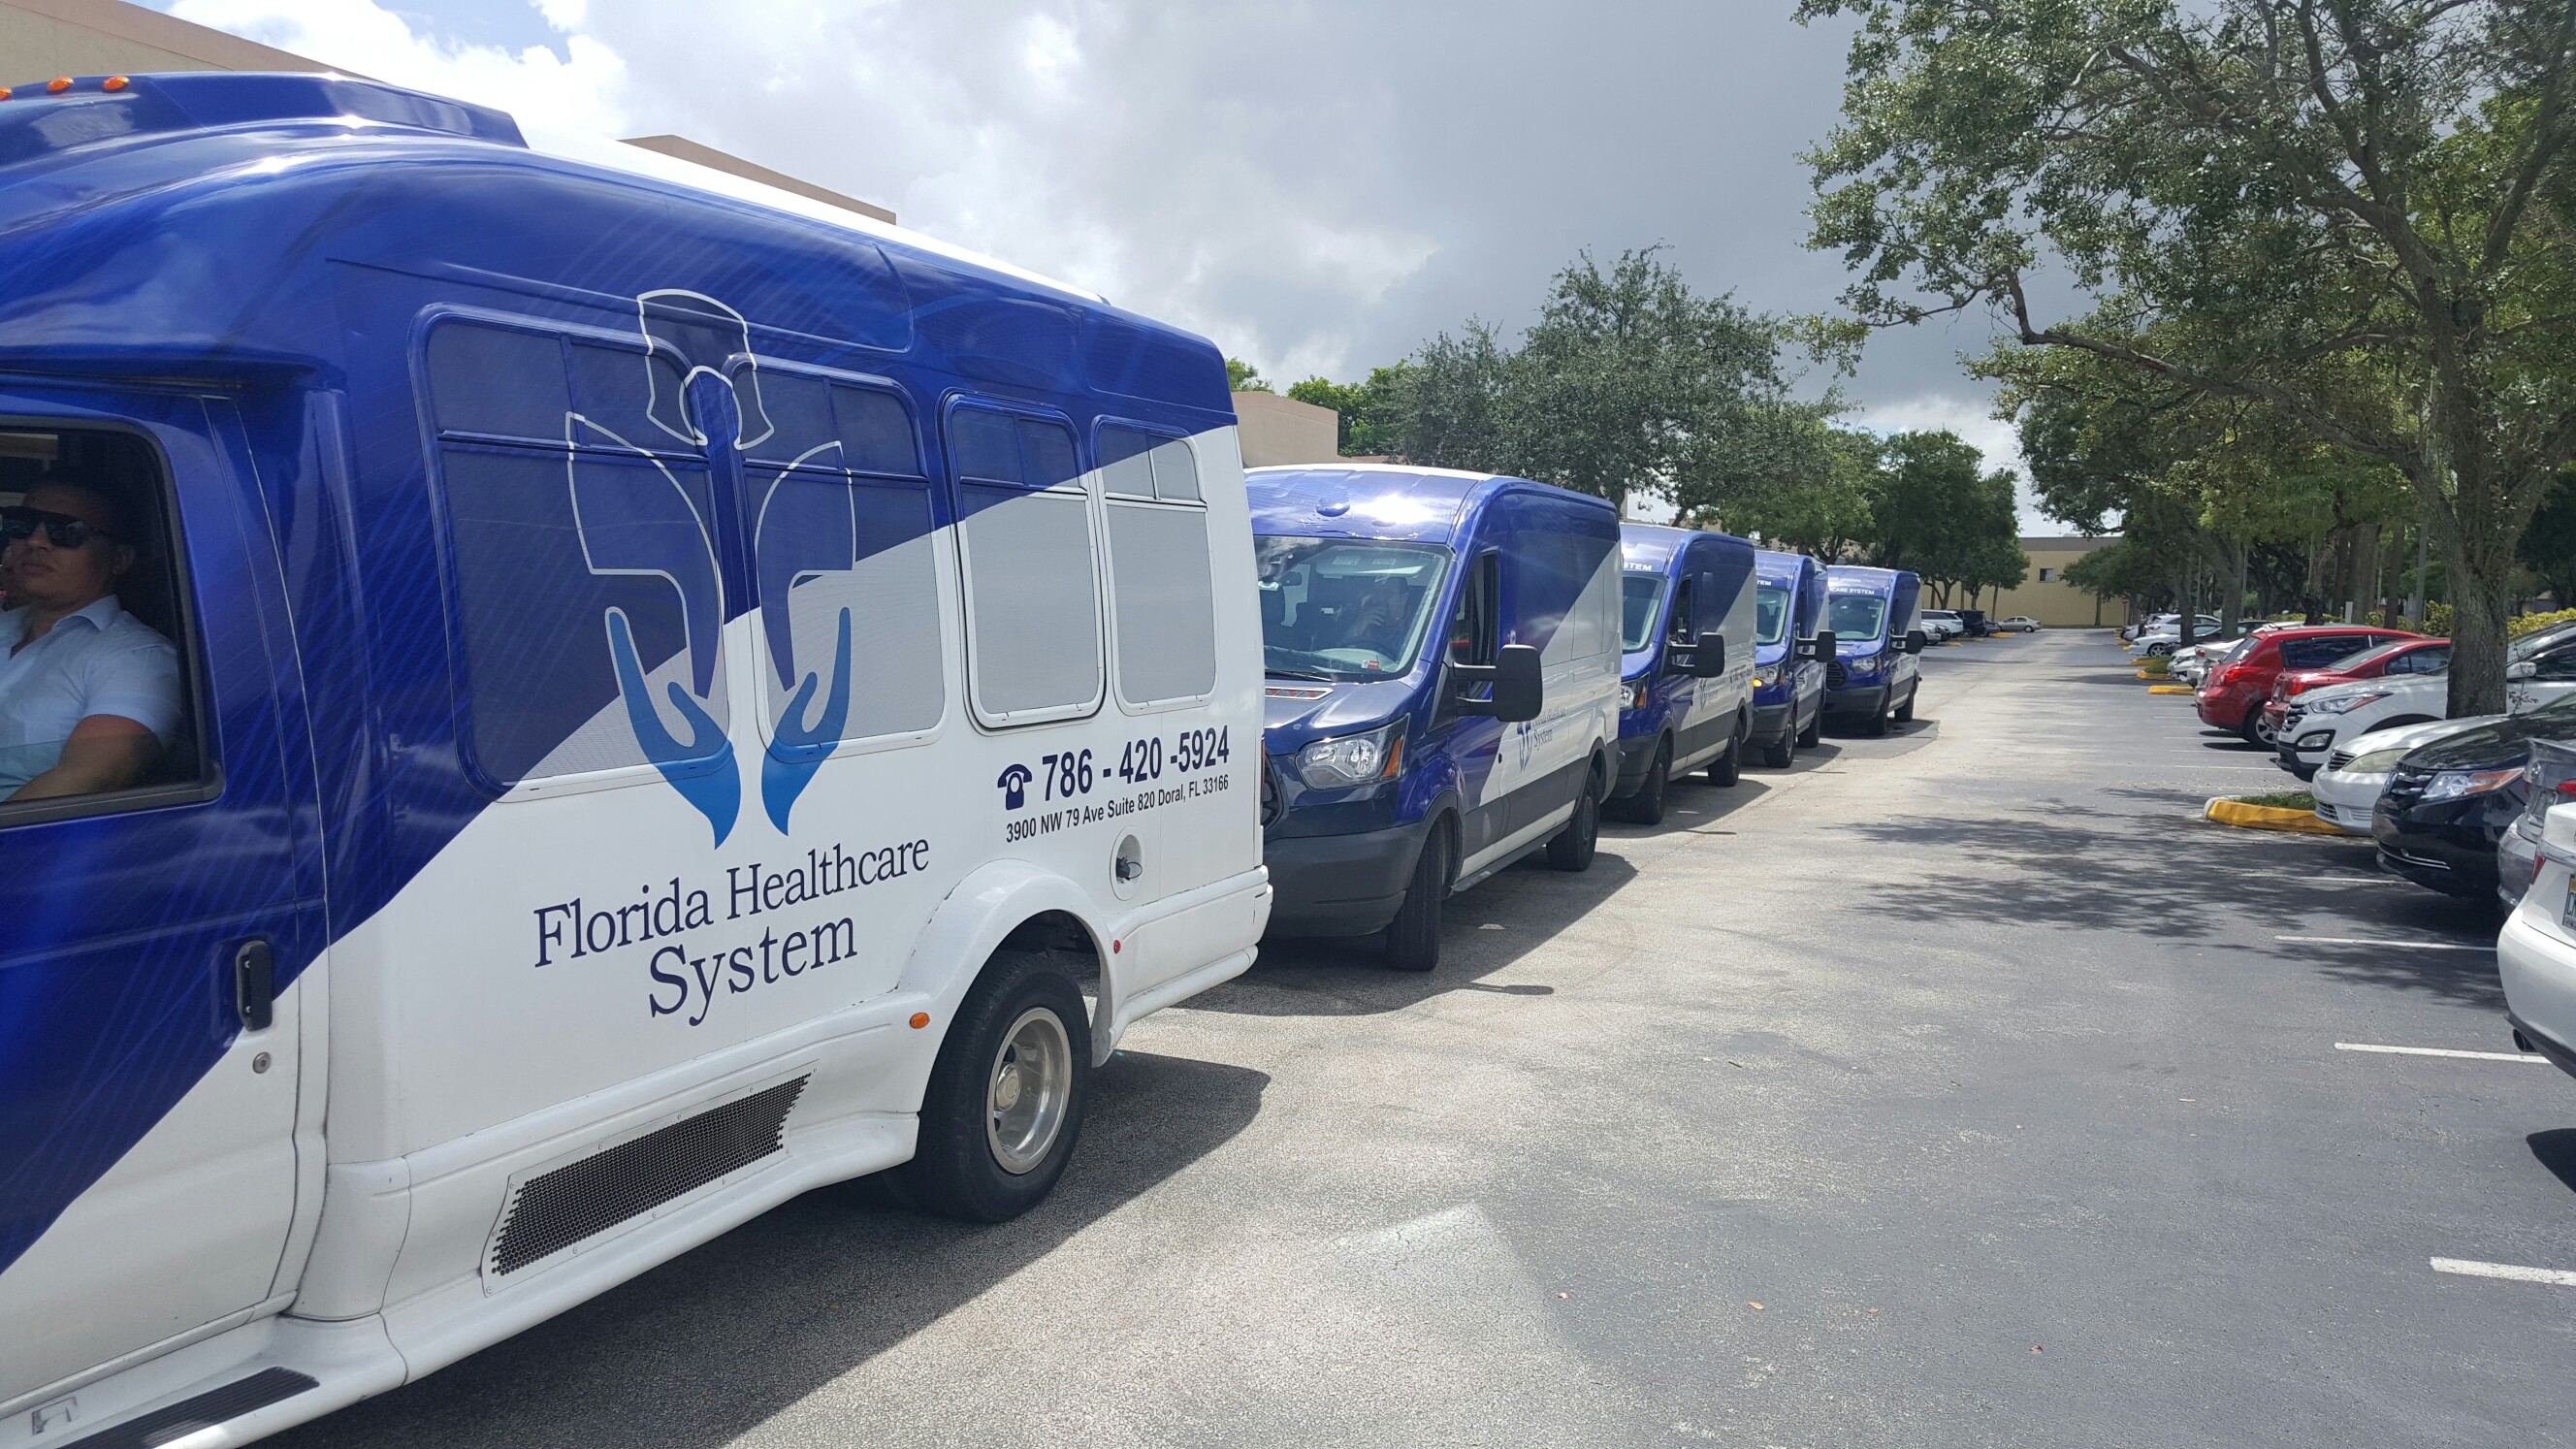 Escort service Jobs in Doral, FL